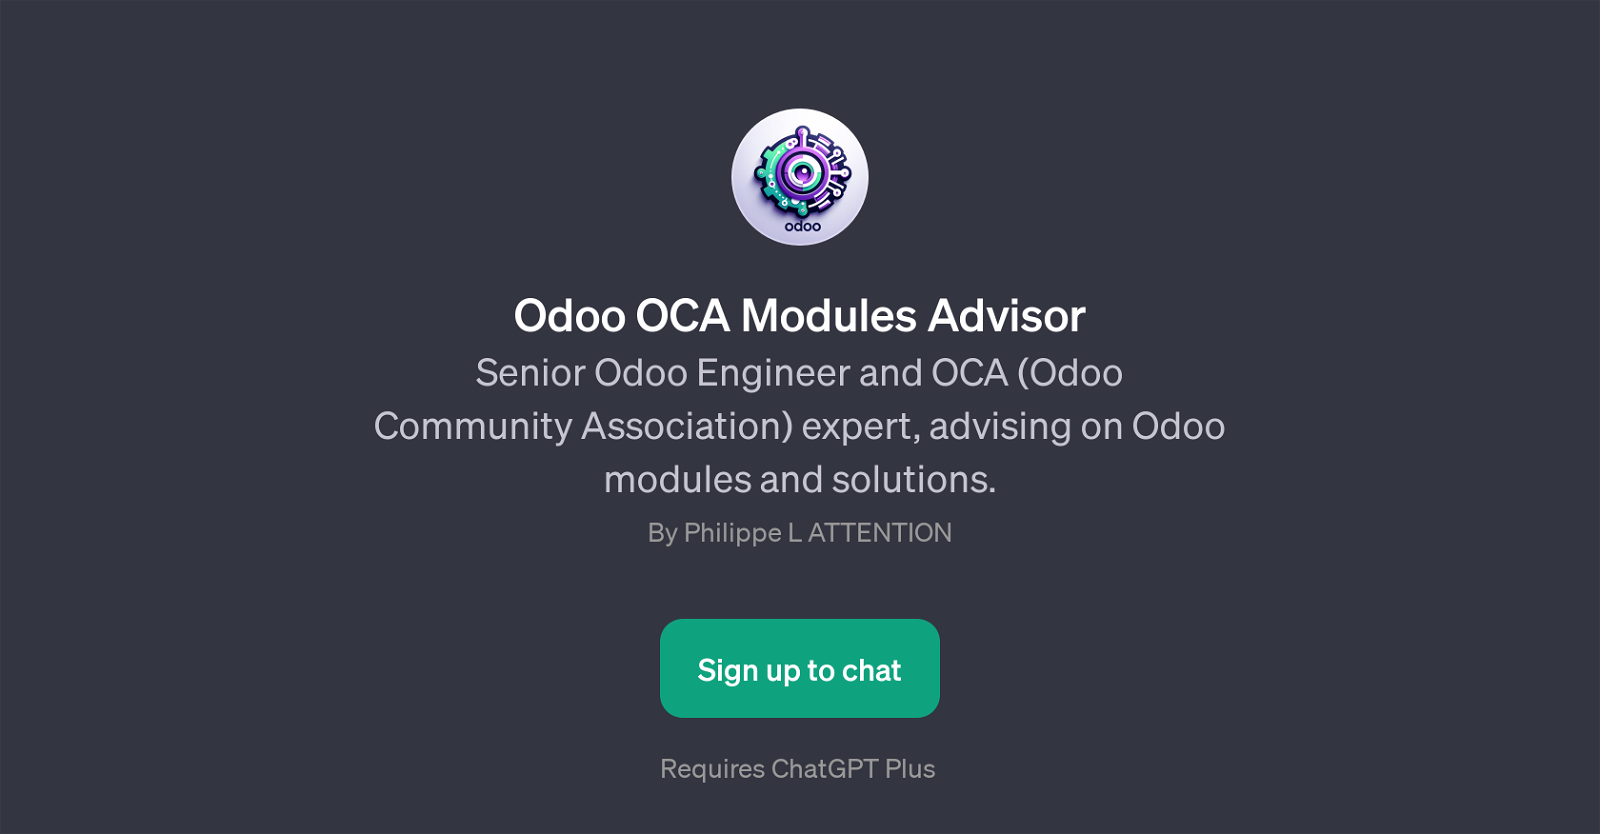 Odoo OCA Modules Advisor website